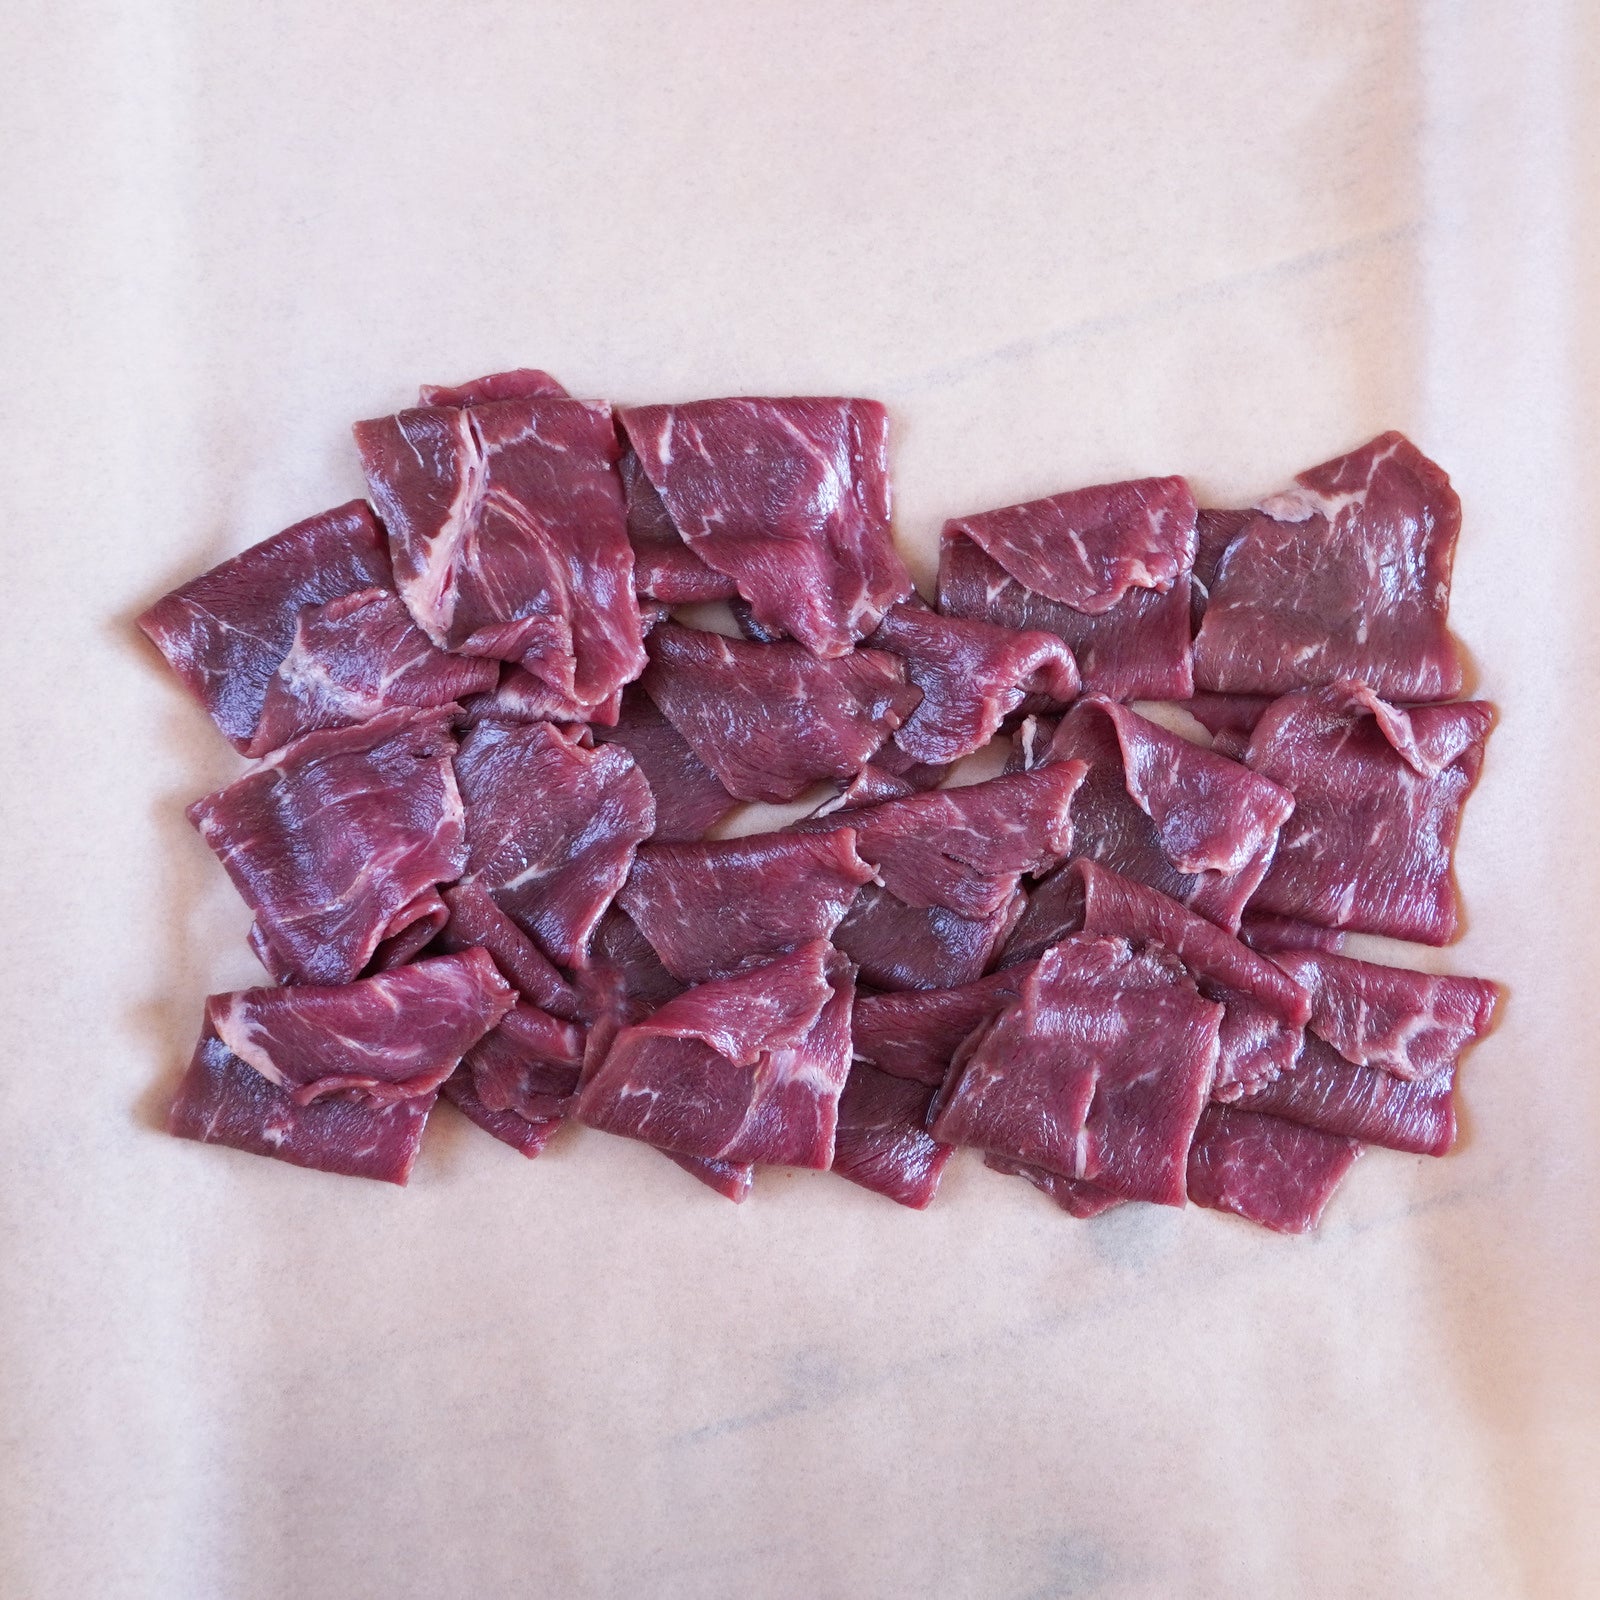 Grass-Fed Beef Premium Thin Slices (300g) - Horizon Farms